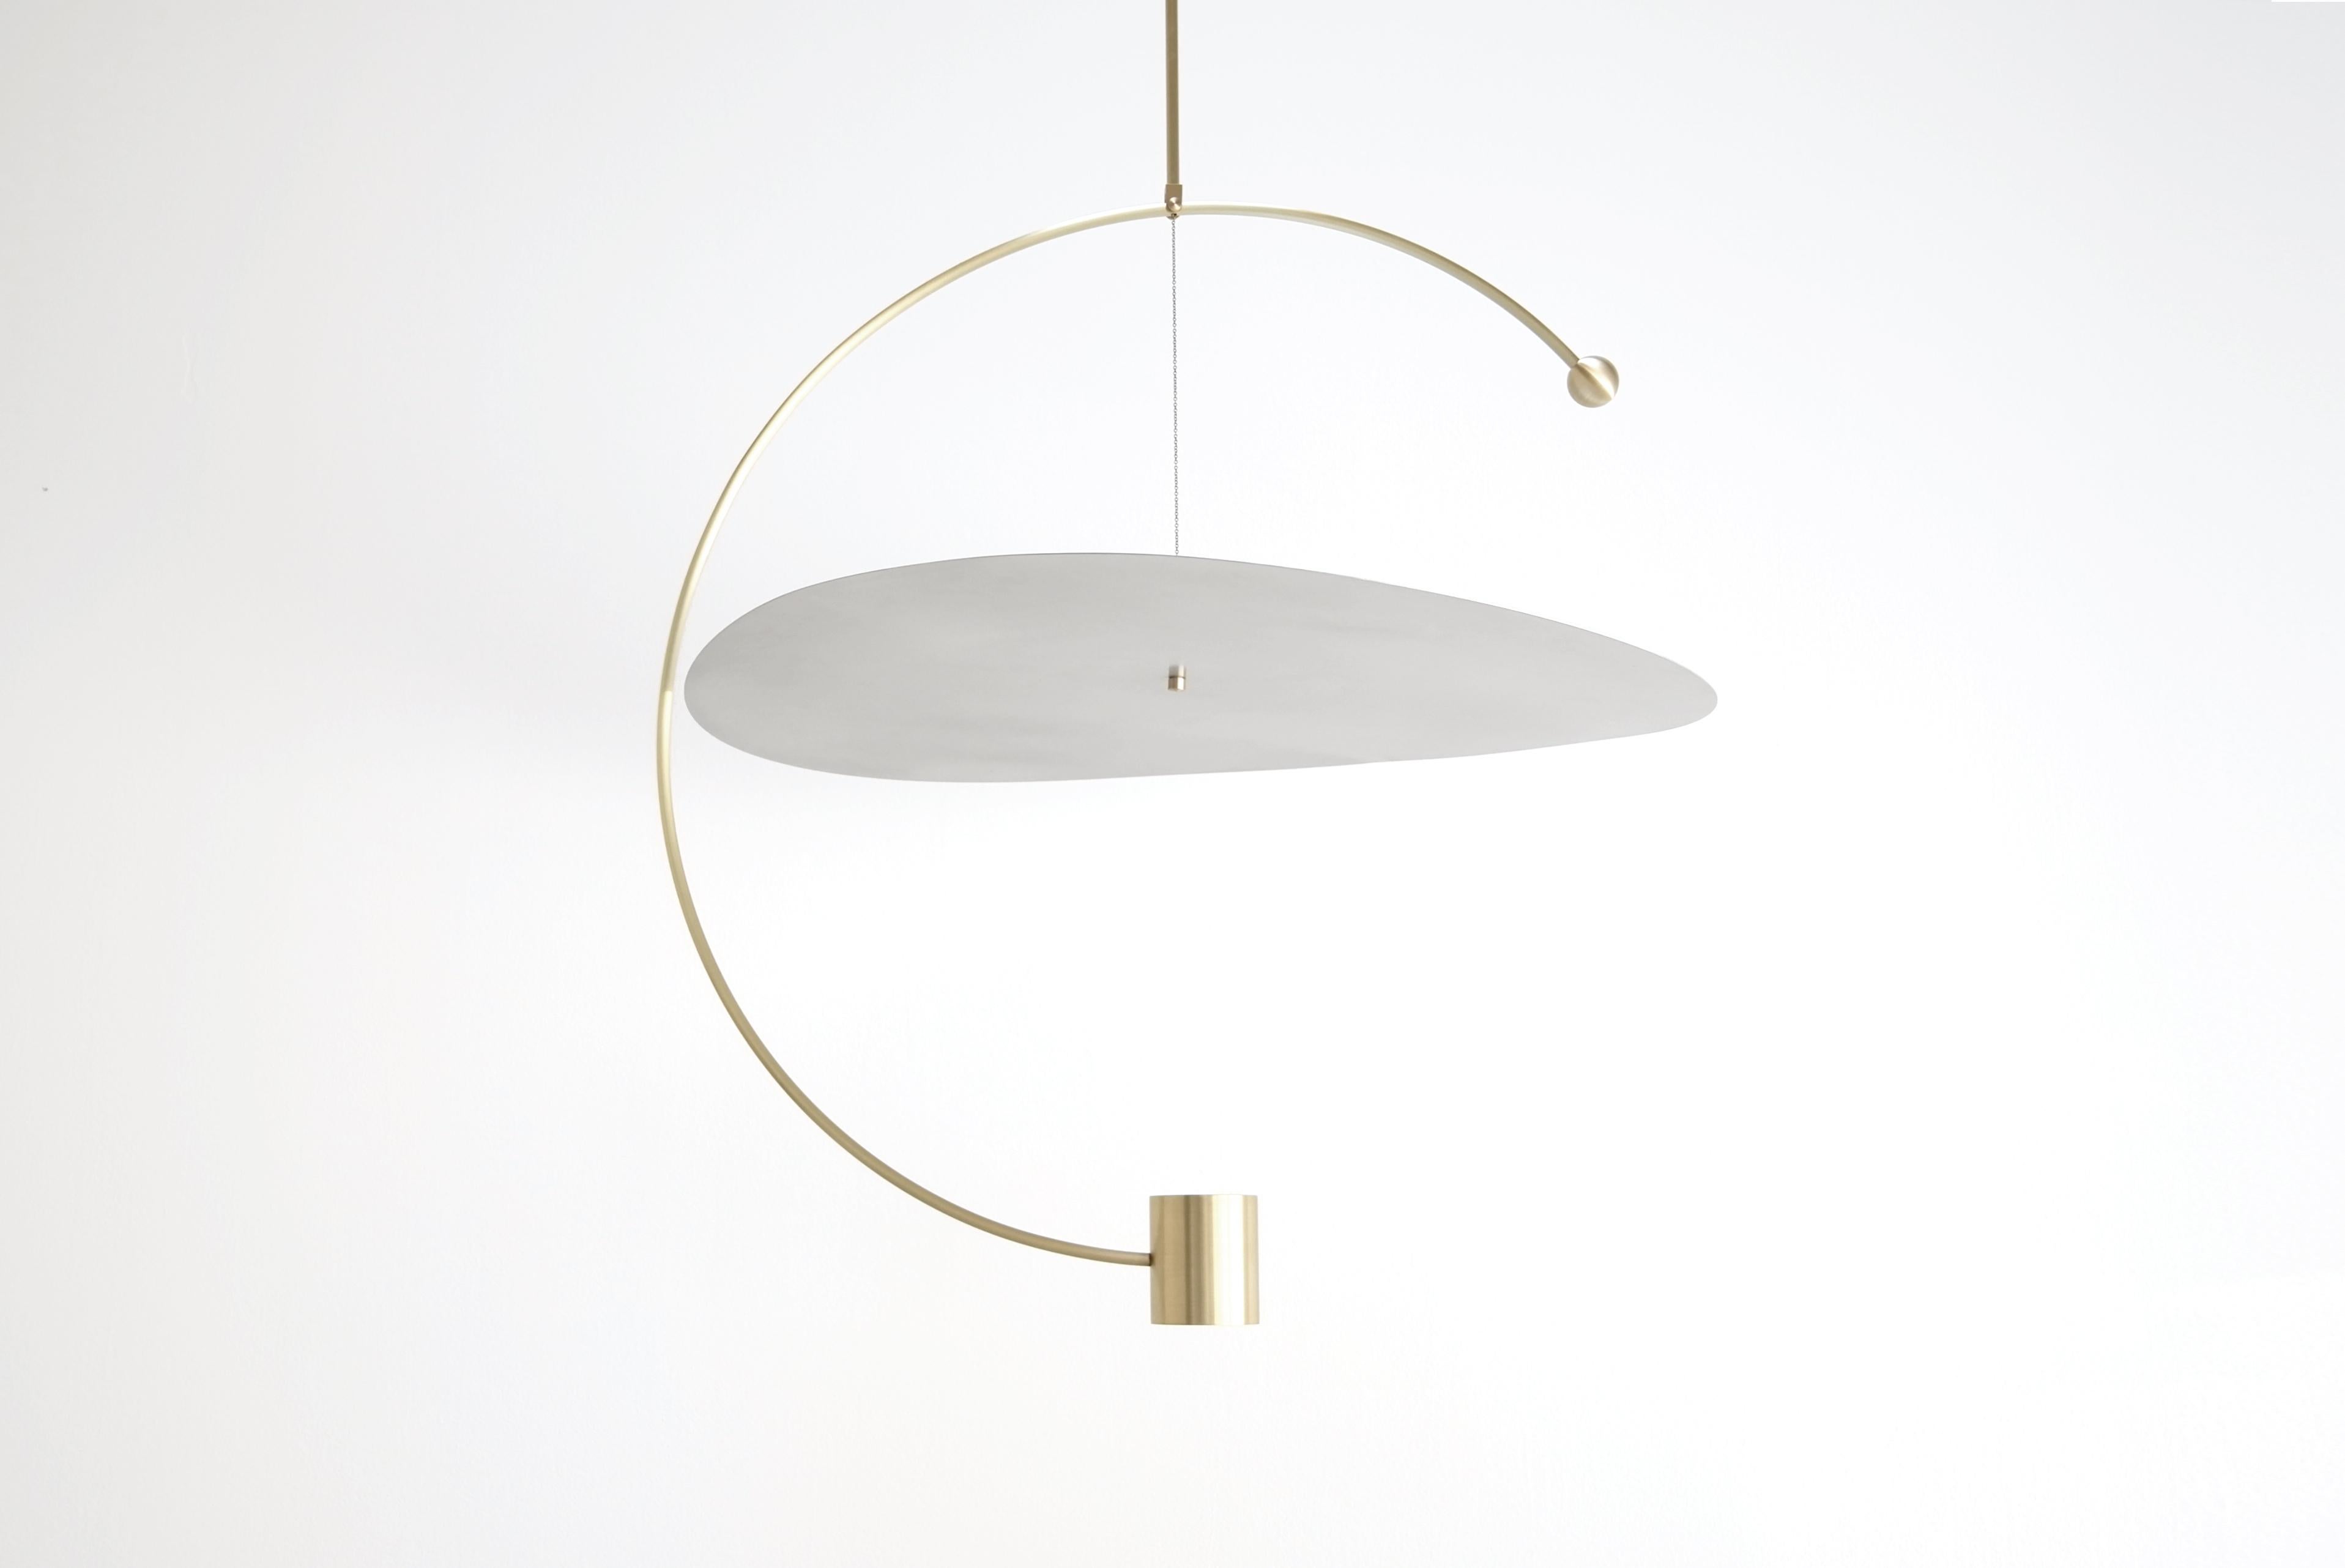 Float circle pendant light by Ladies & Gentlemen Studio.
Dimensions: 31